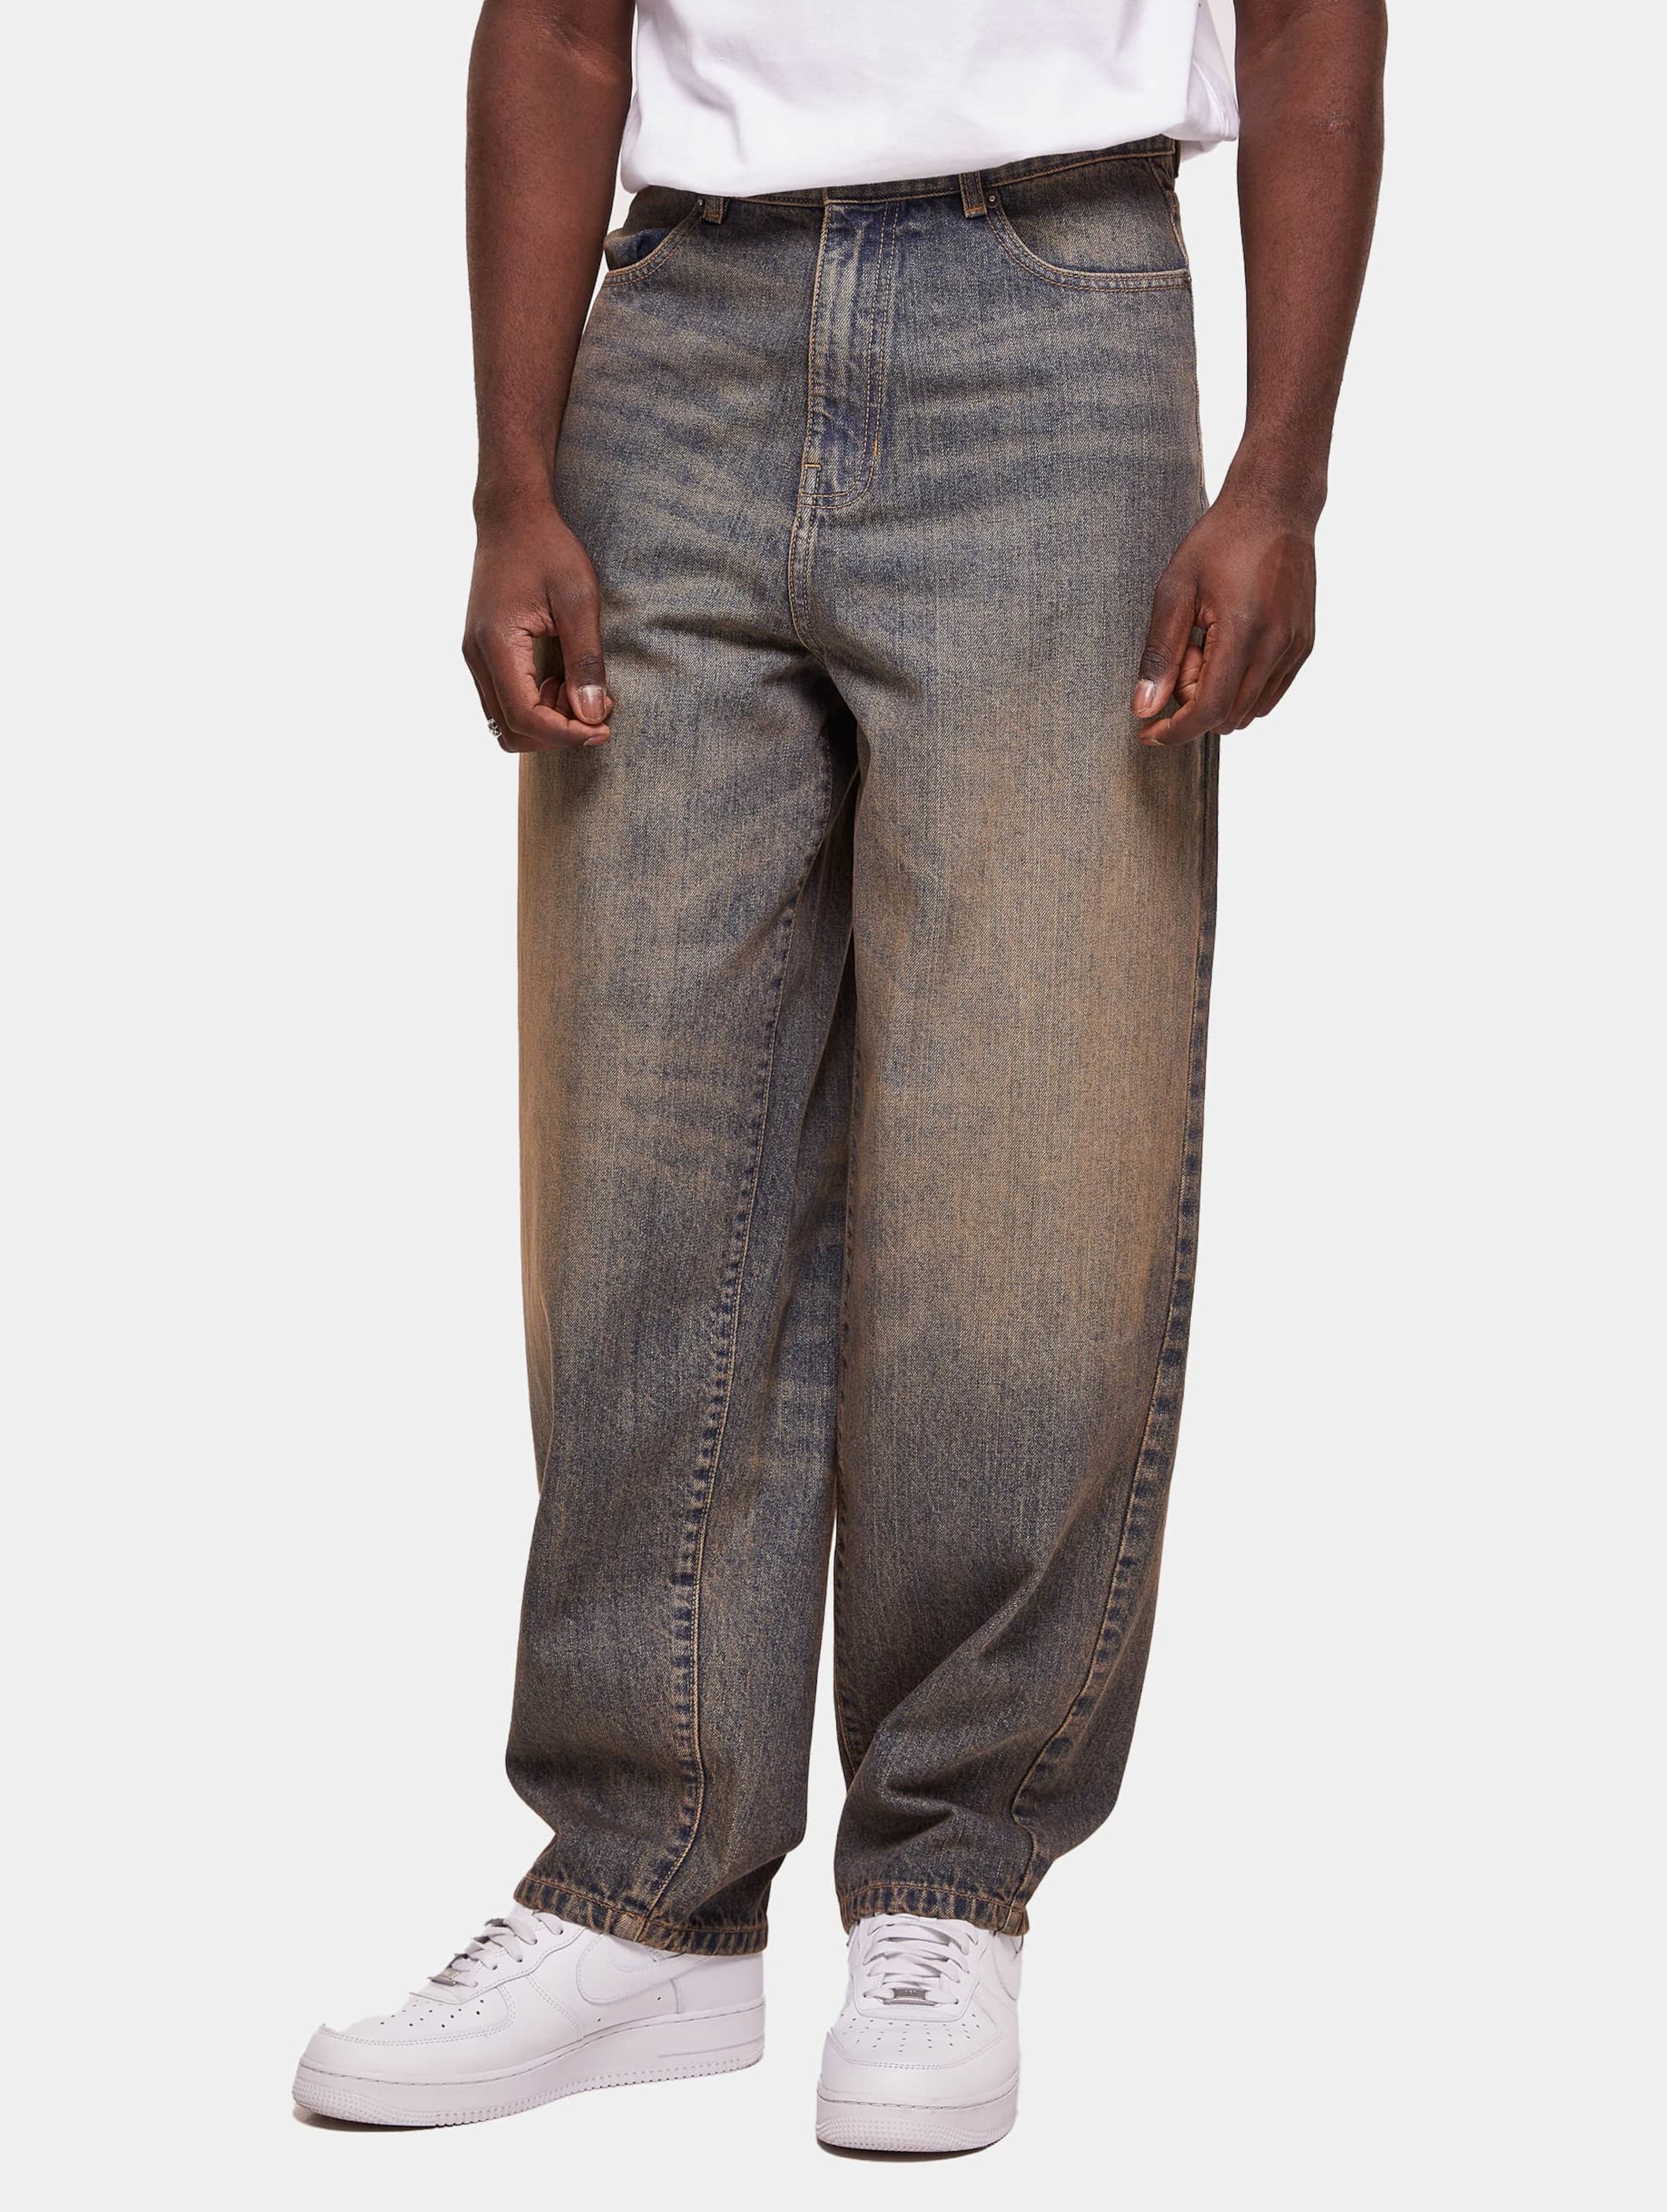 Urban Classics 90‘s Jeans product